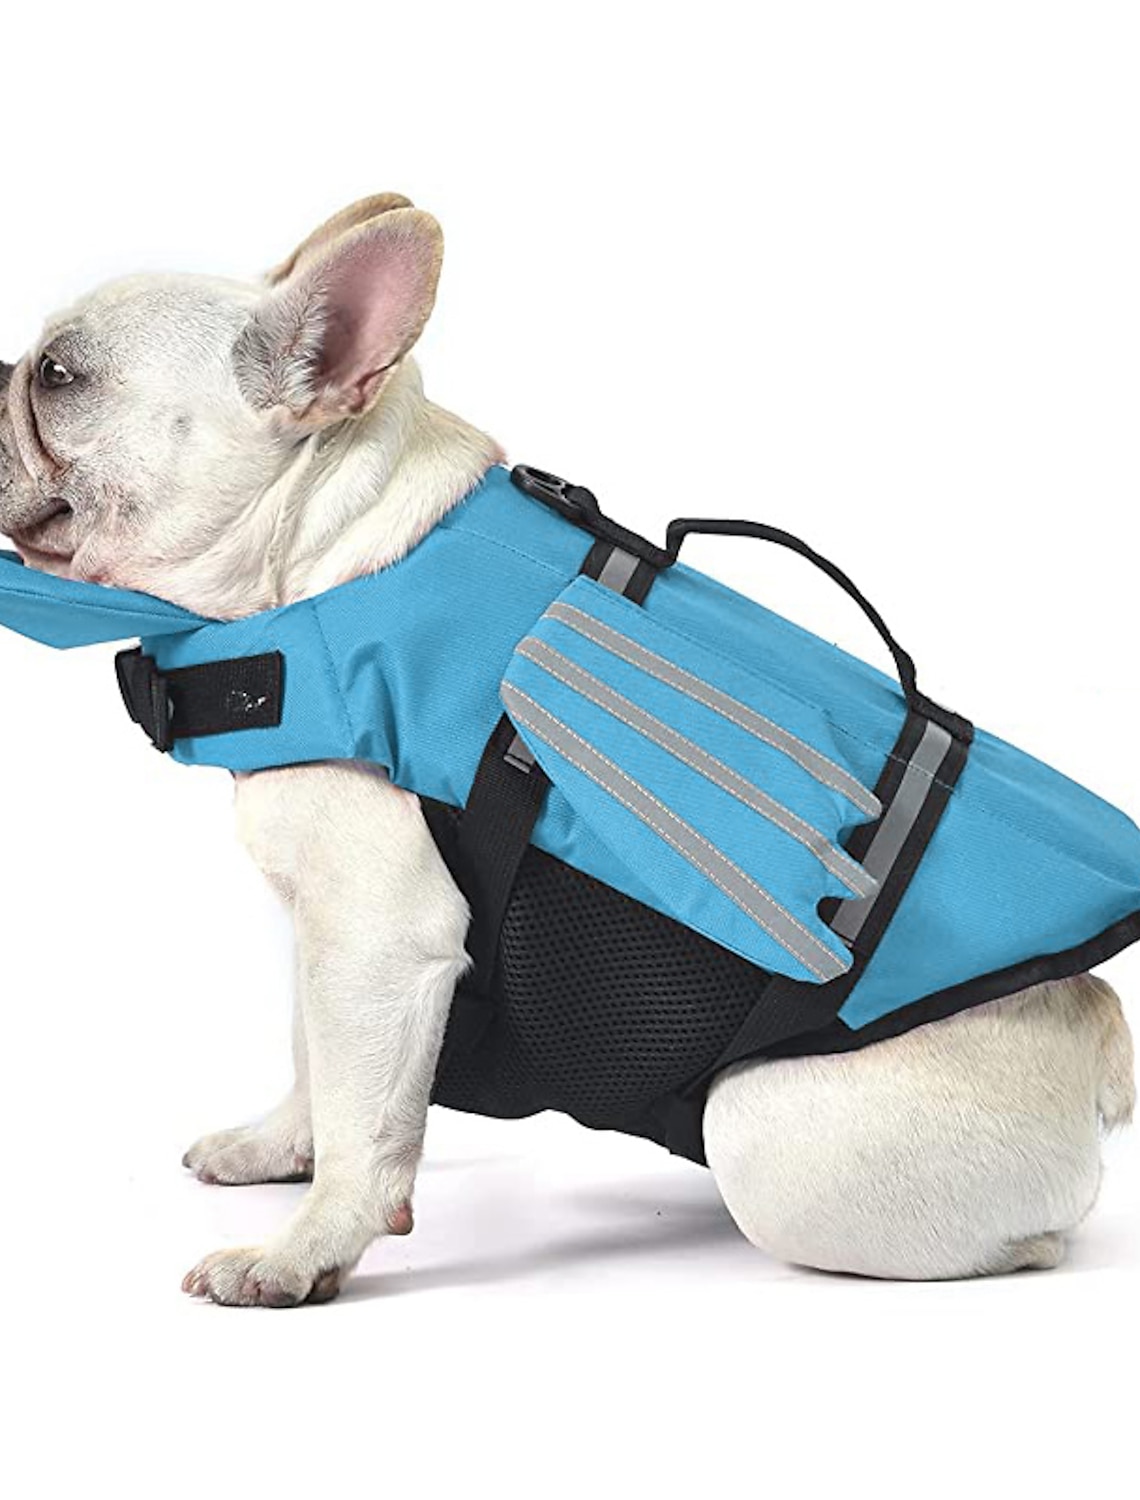 Dog Life Jacket Buoyancy Aid Pet Safety Swimming Boating Adjustable Vest Suit MN 